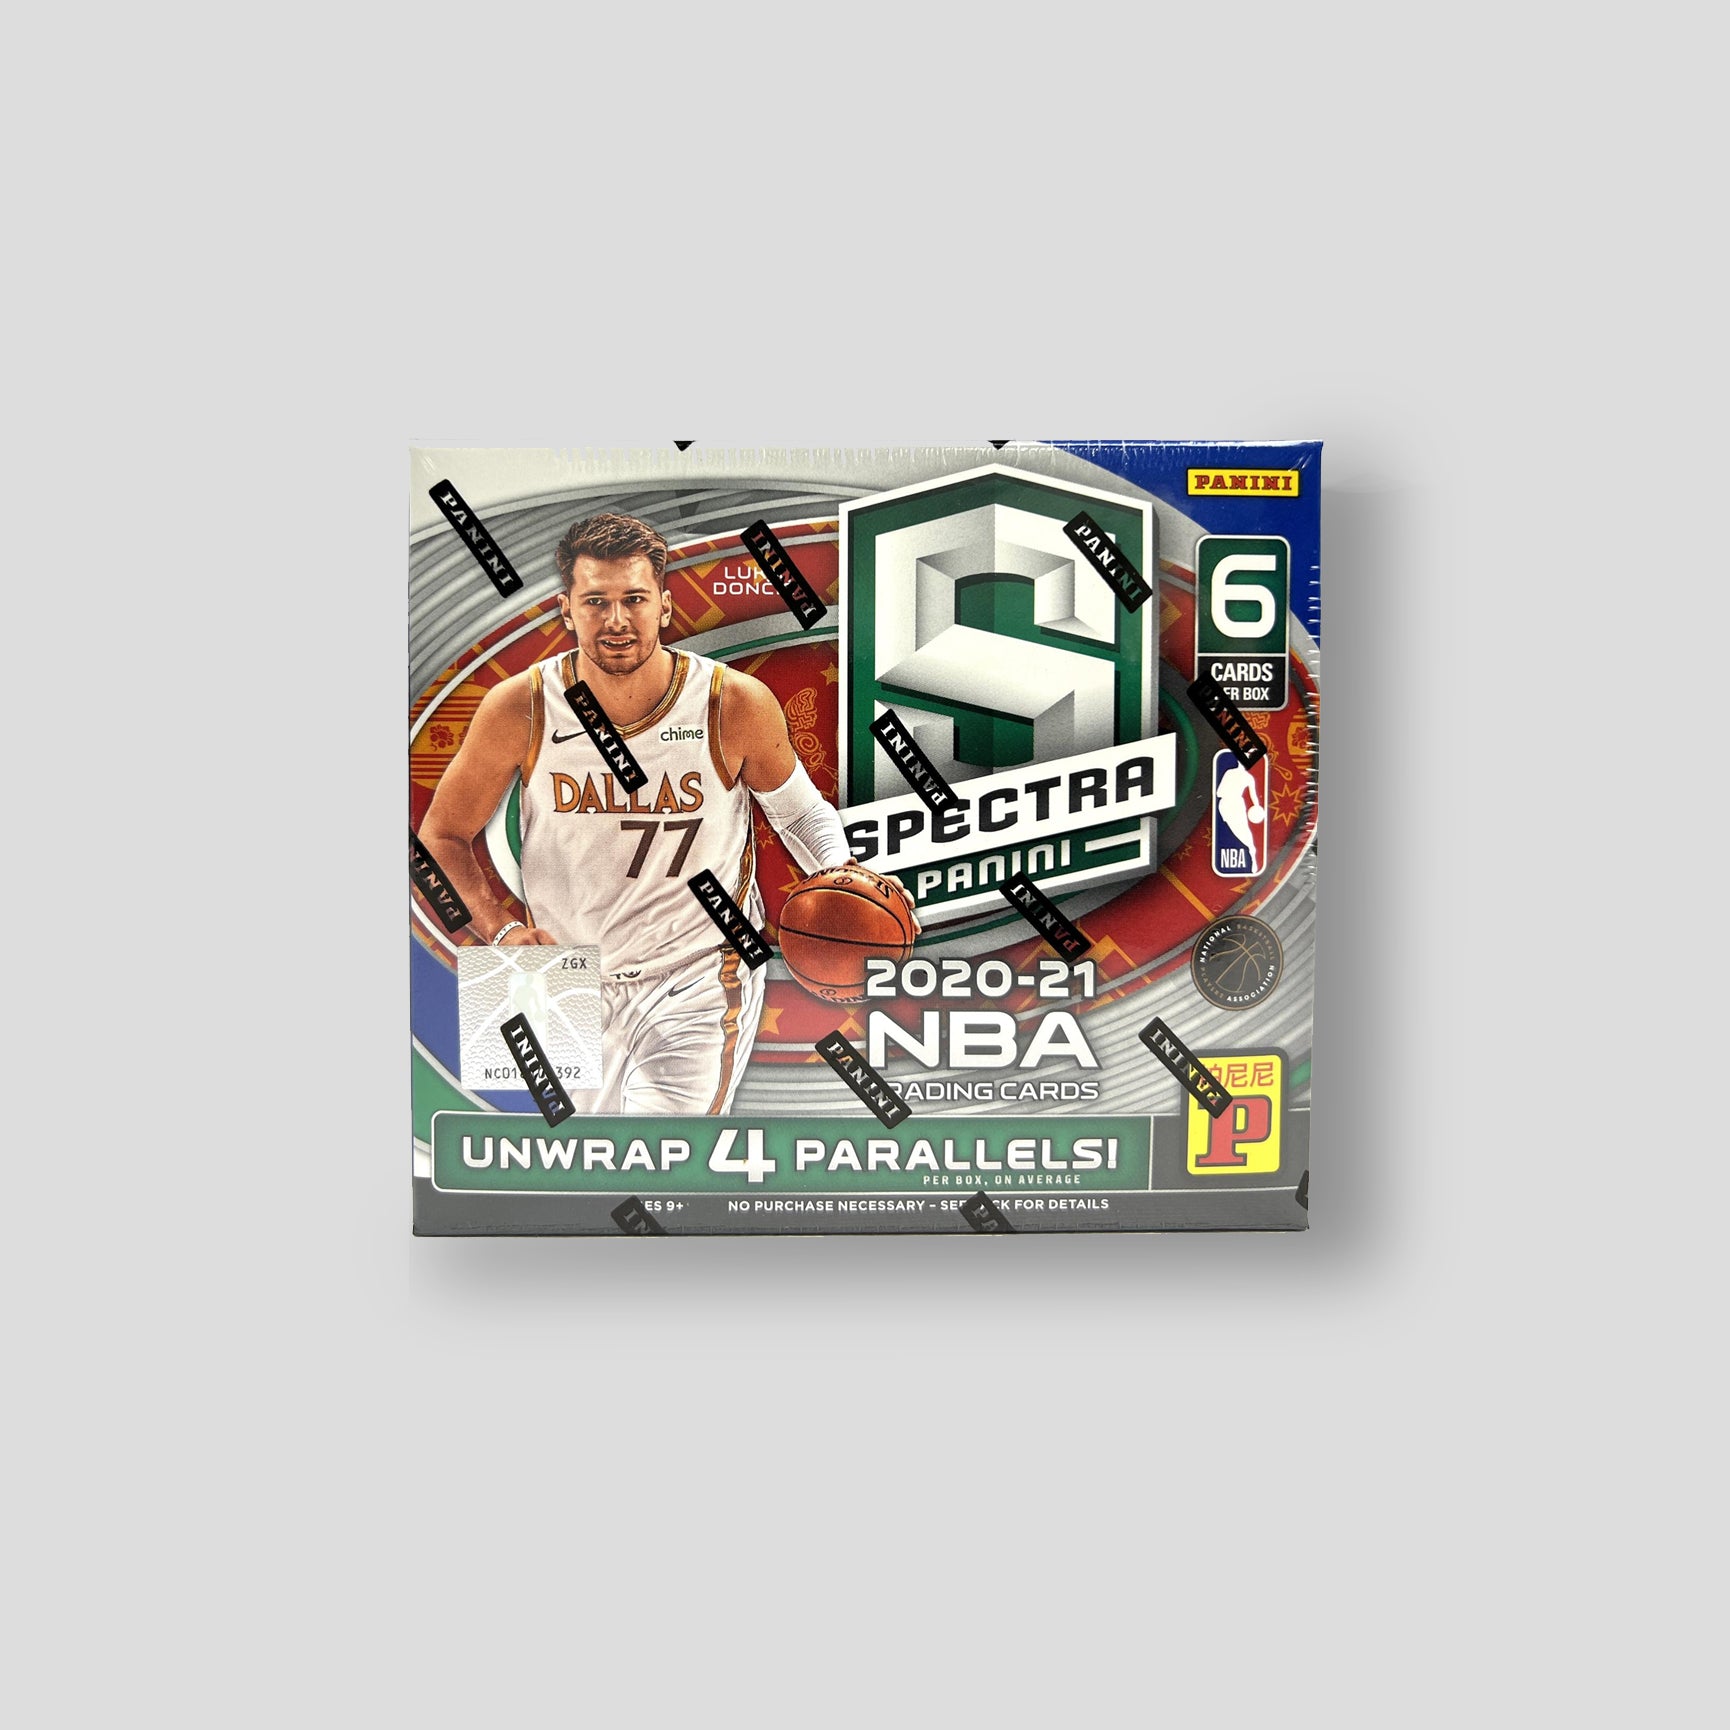 2020-21 Panini Spectra Basketball Tmall Box - Q's Cards